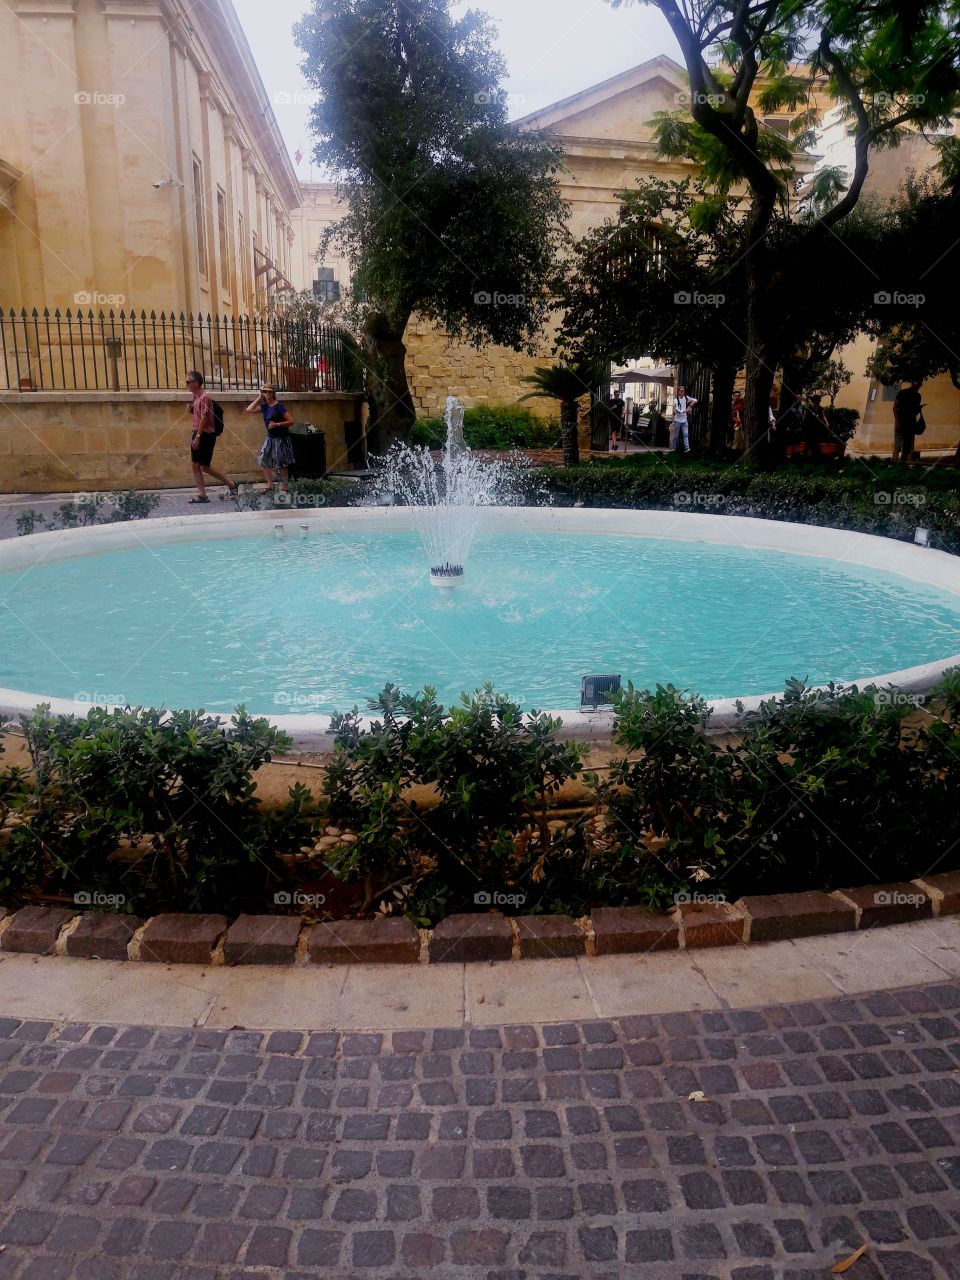 Water fountain in Valleta.